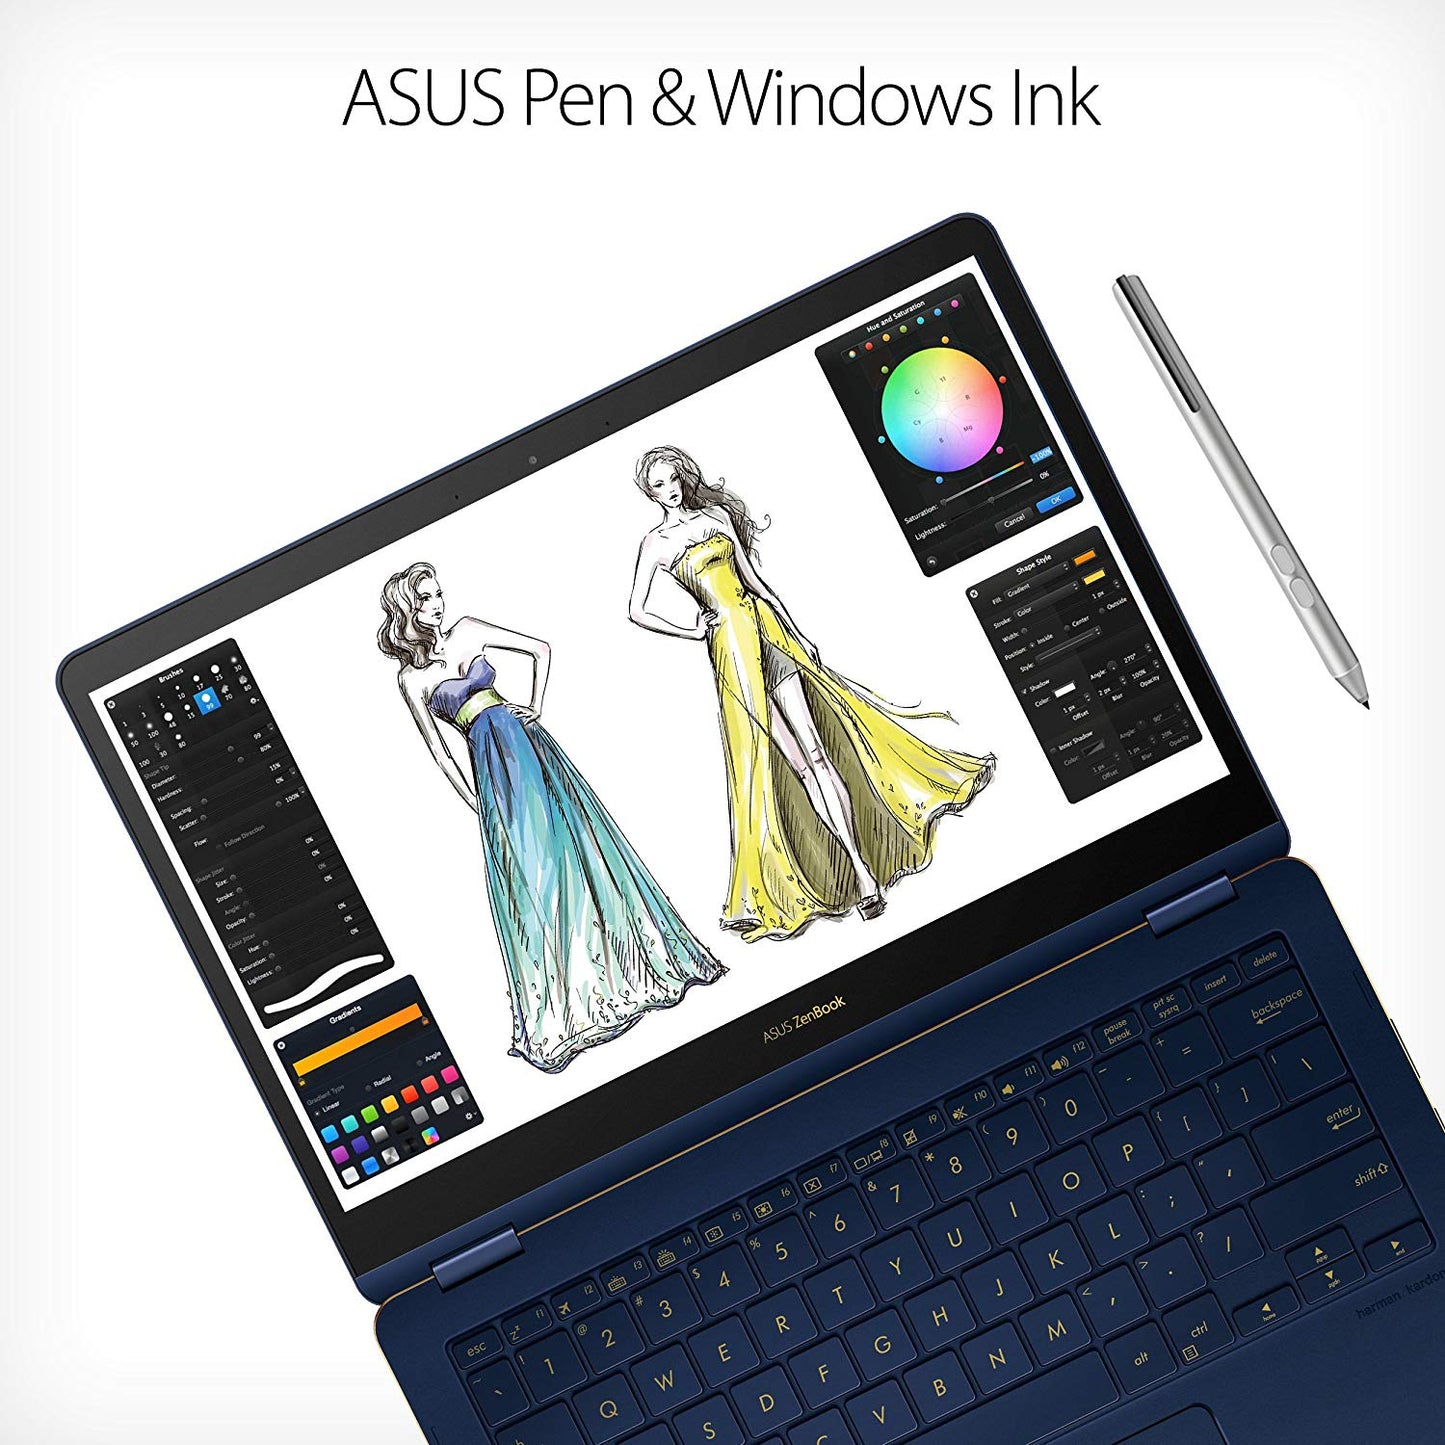 ASUS ZenBook Flip S Touchscreen Convertible Laptop